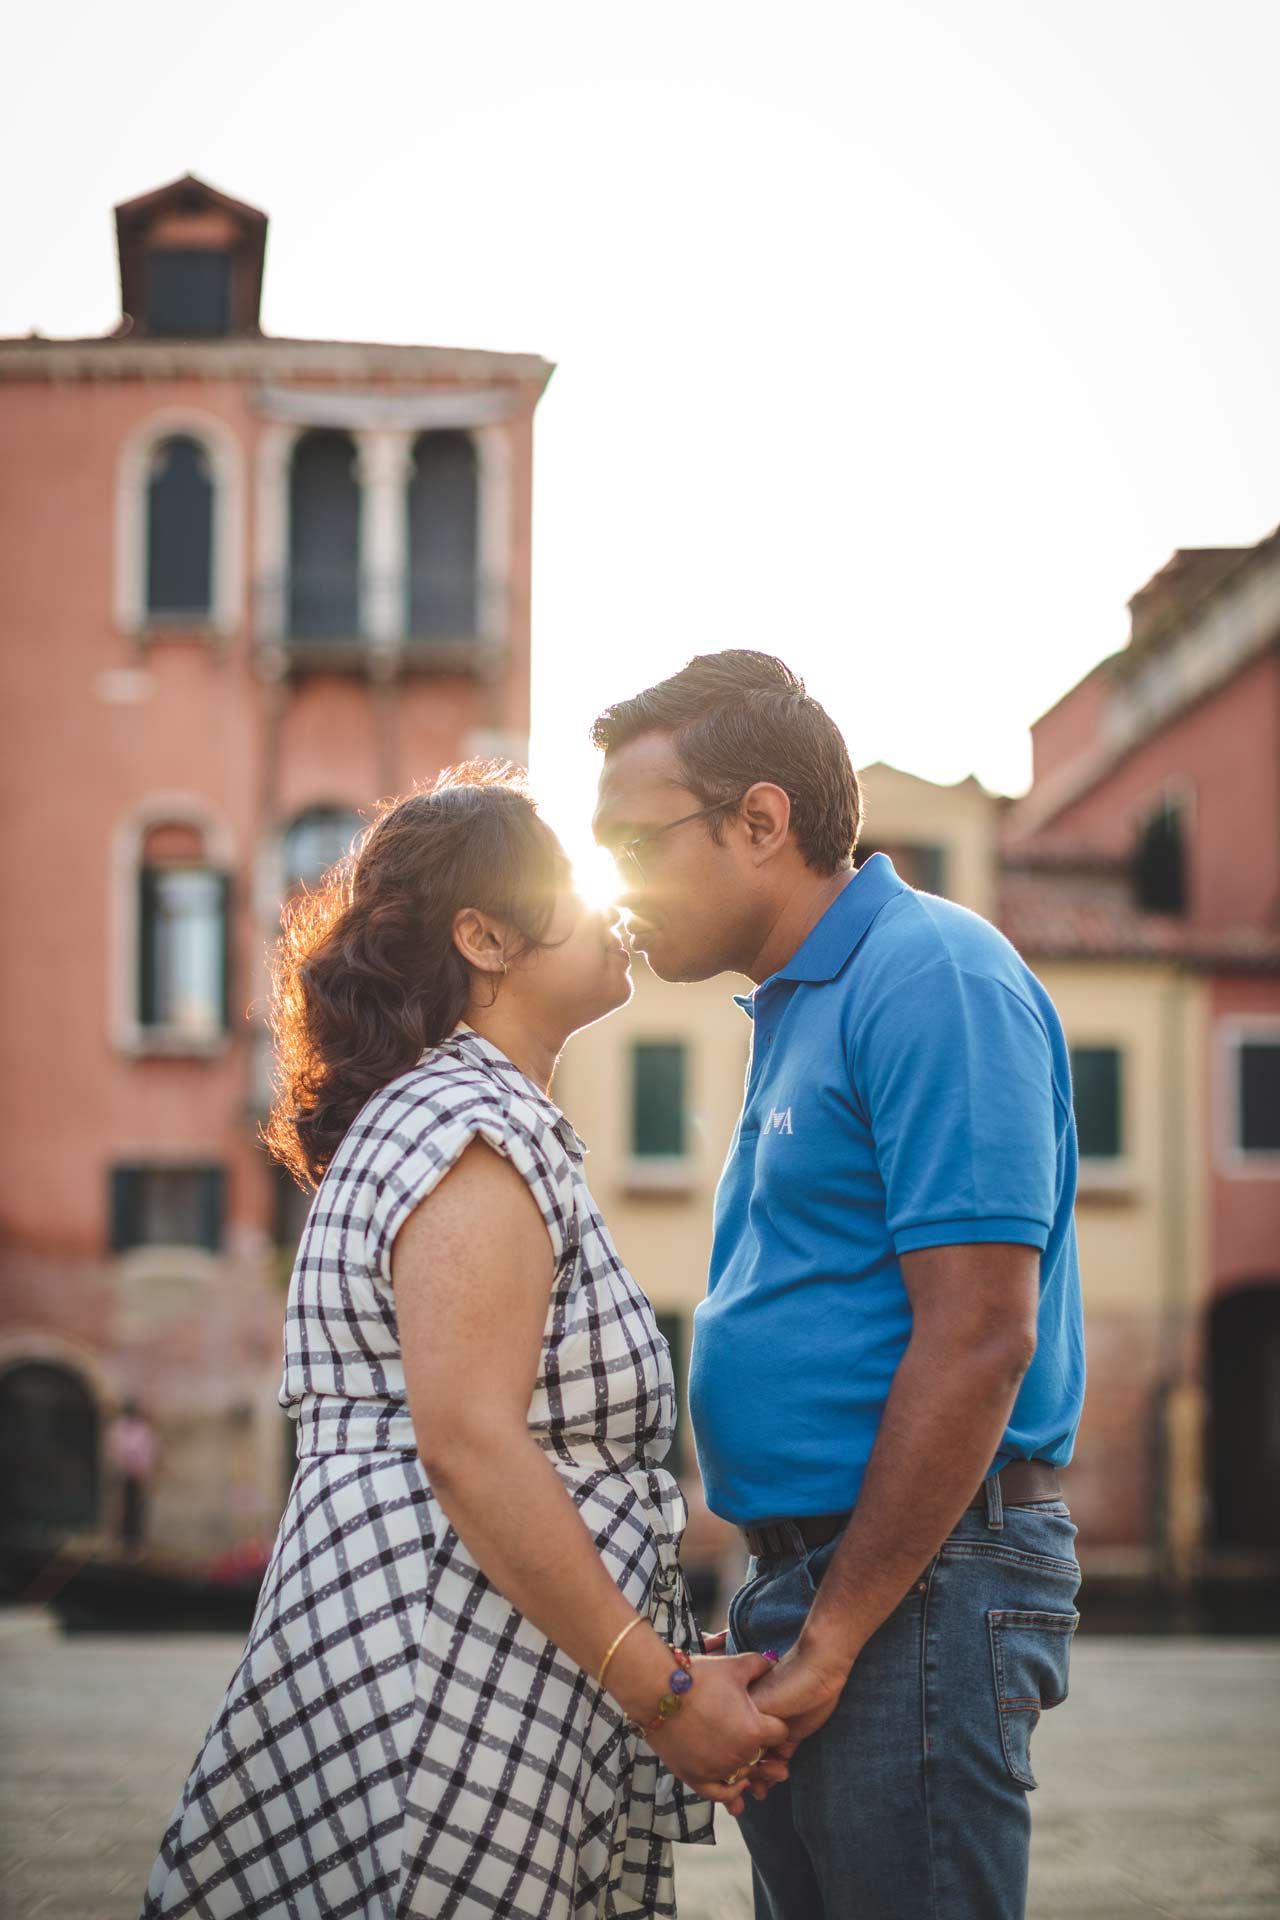 Venice-Castello-Atri-Family-kiss